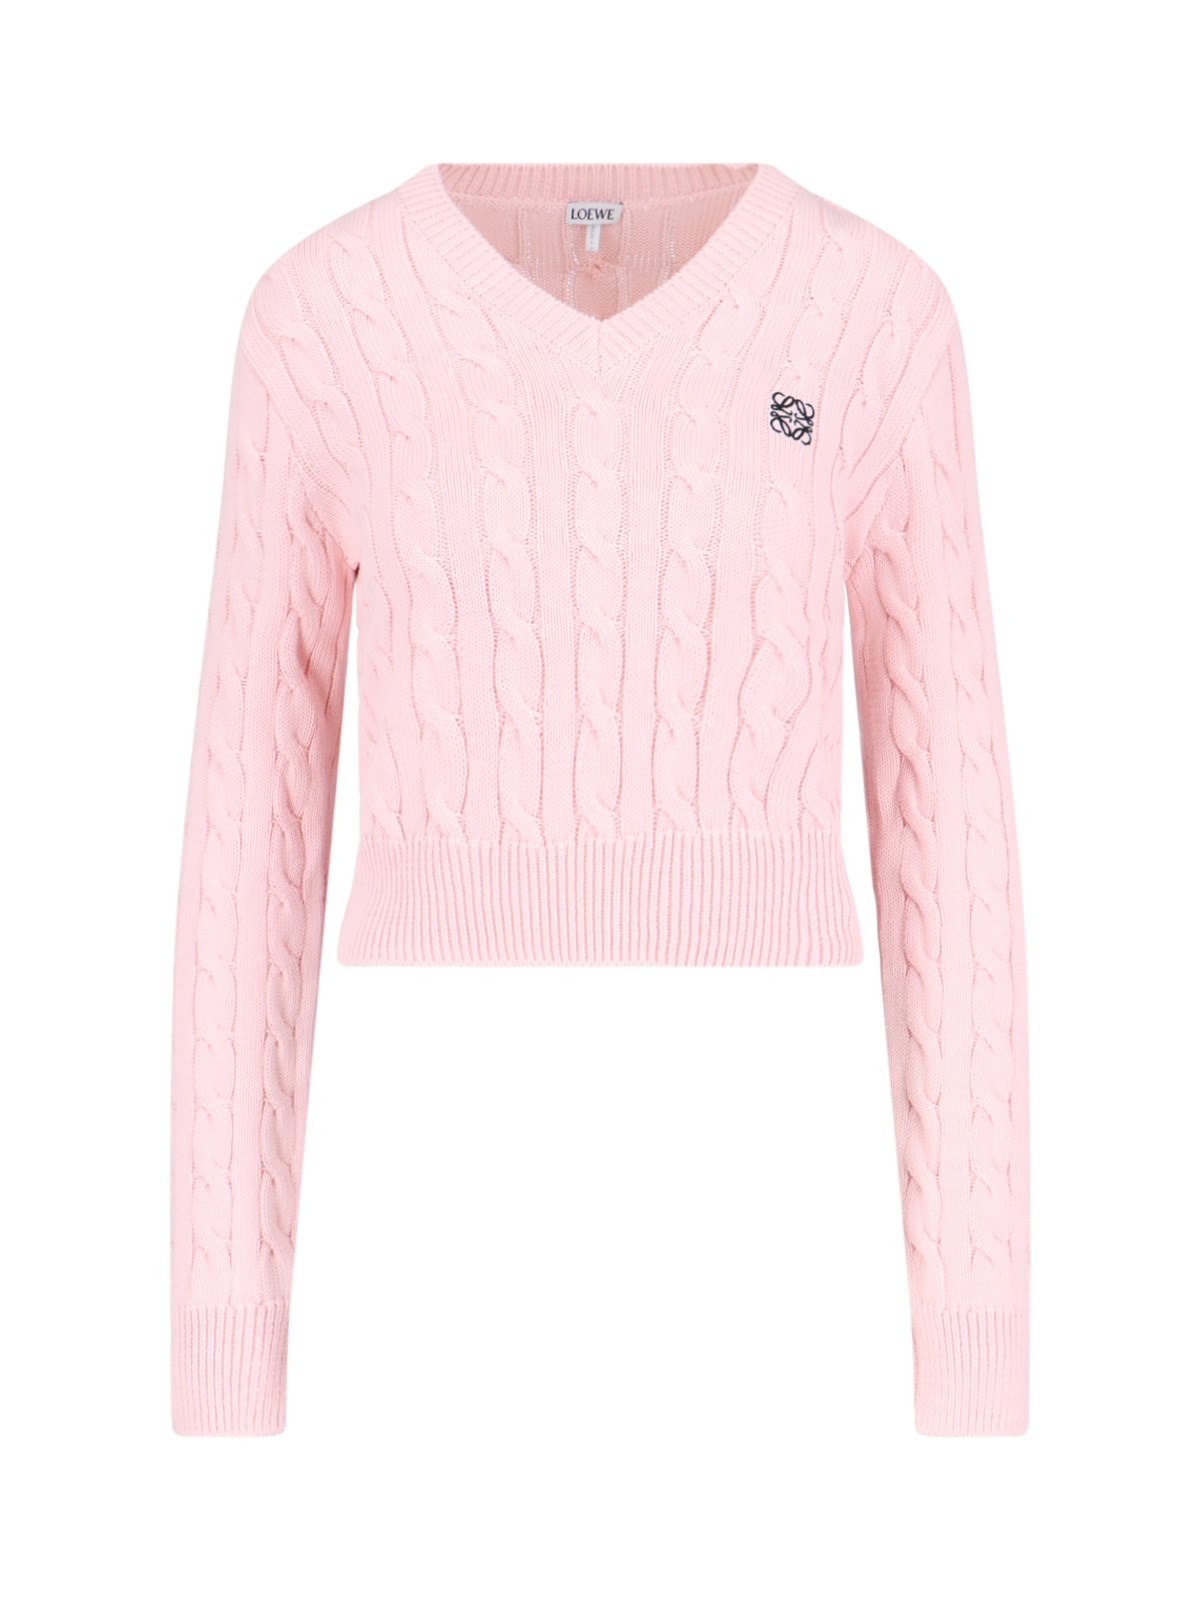 Loewe Logo Crop Sweater In Pink